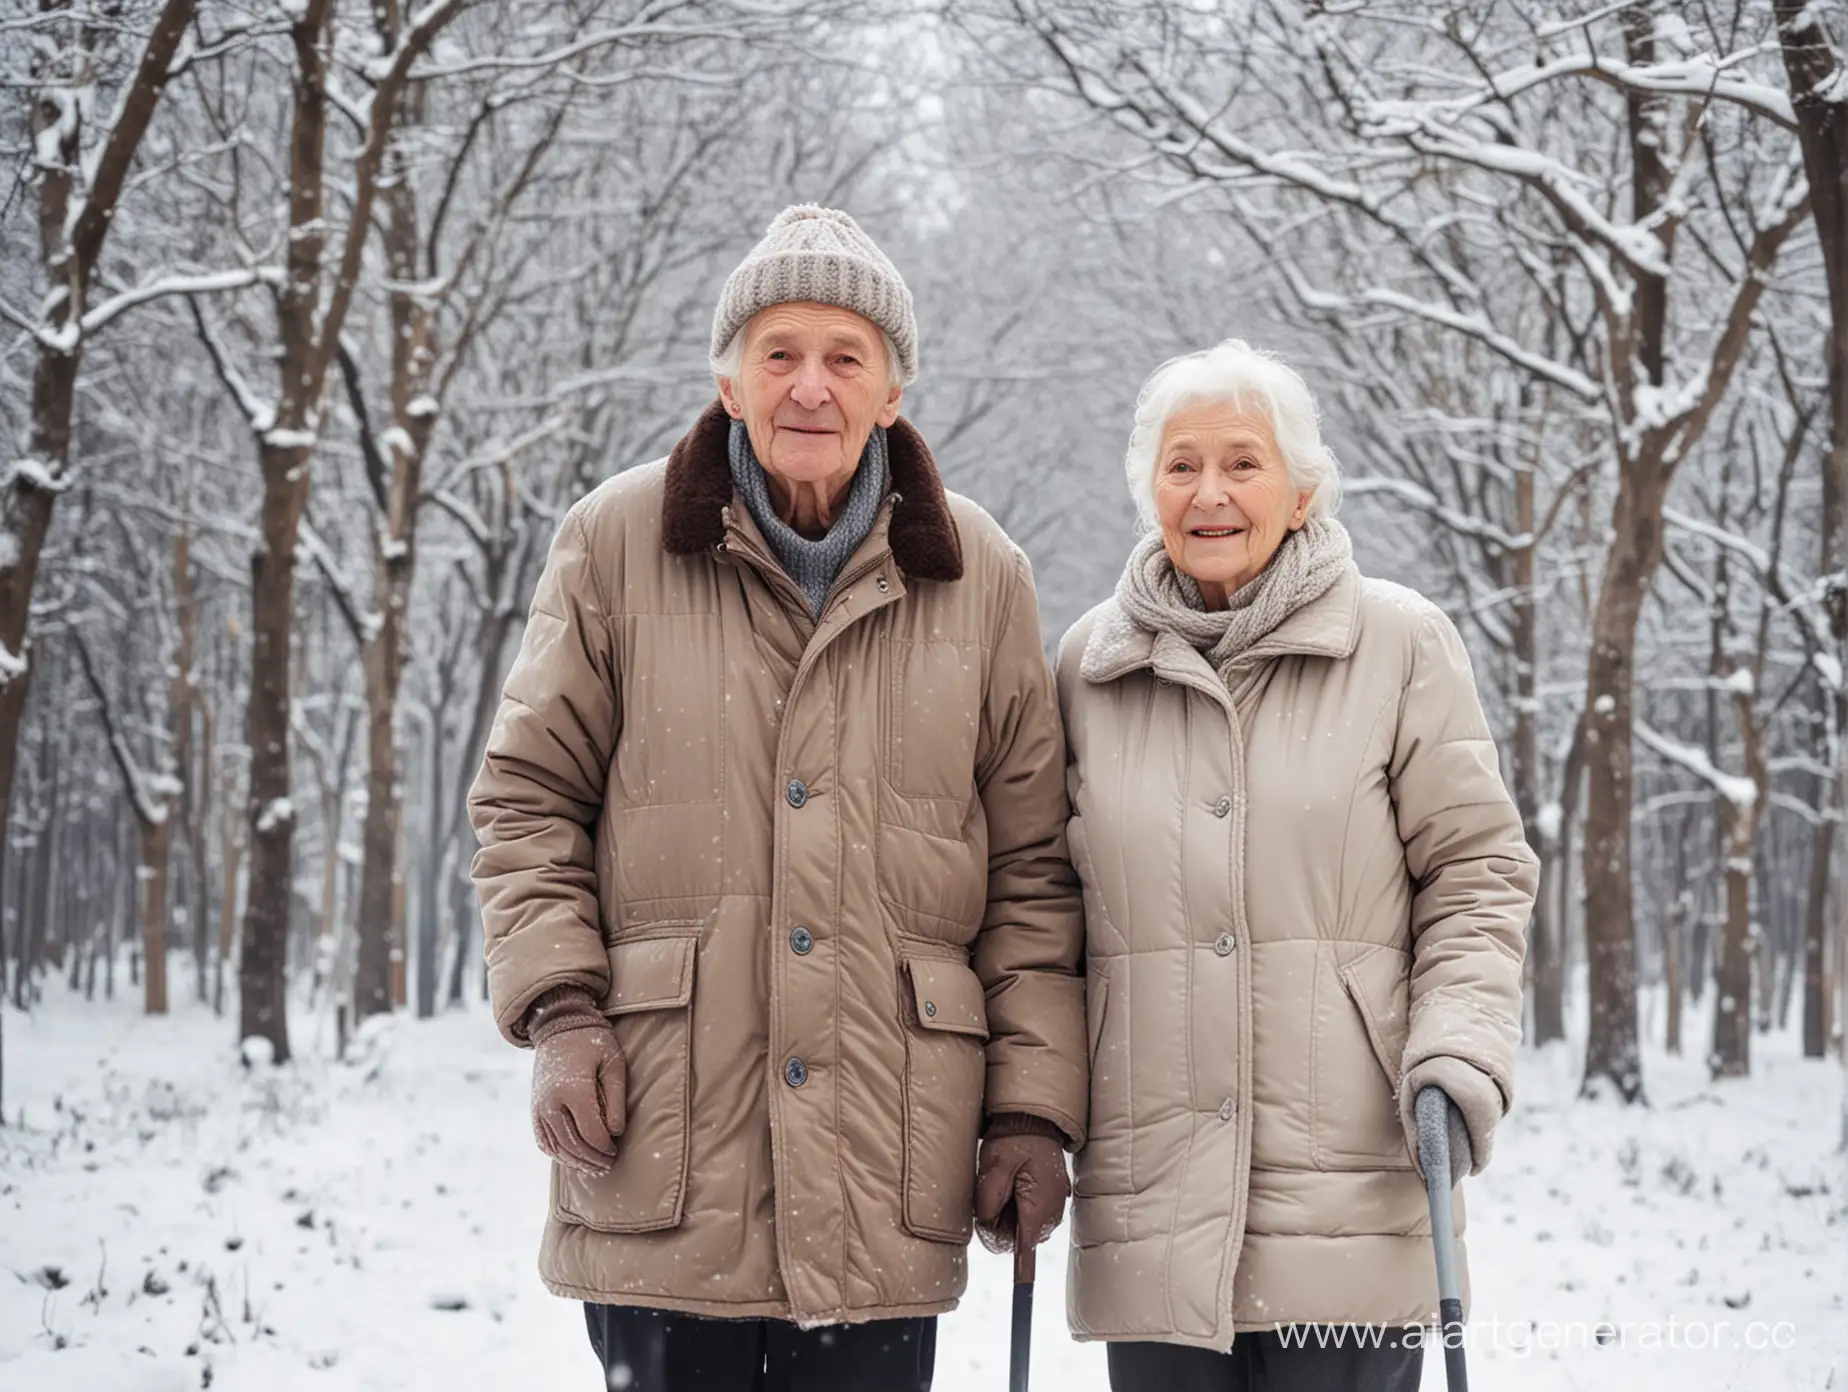 Elderly-People-Enjoying-a-Winter-Wonderland